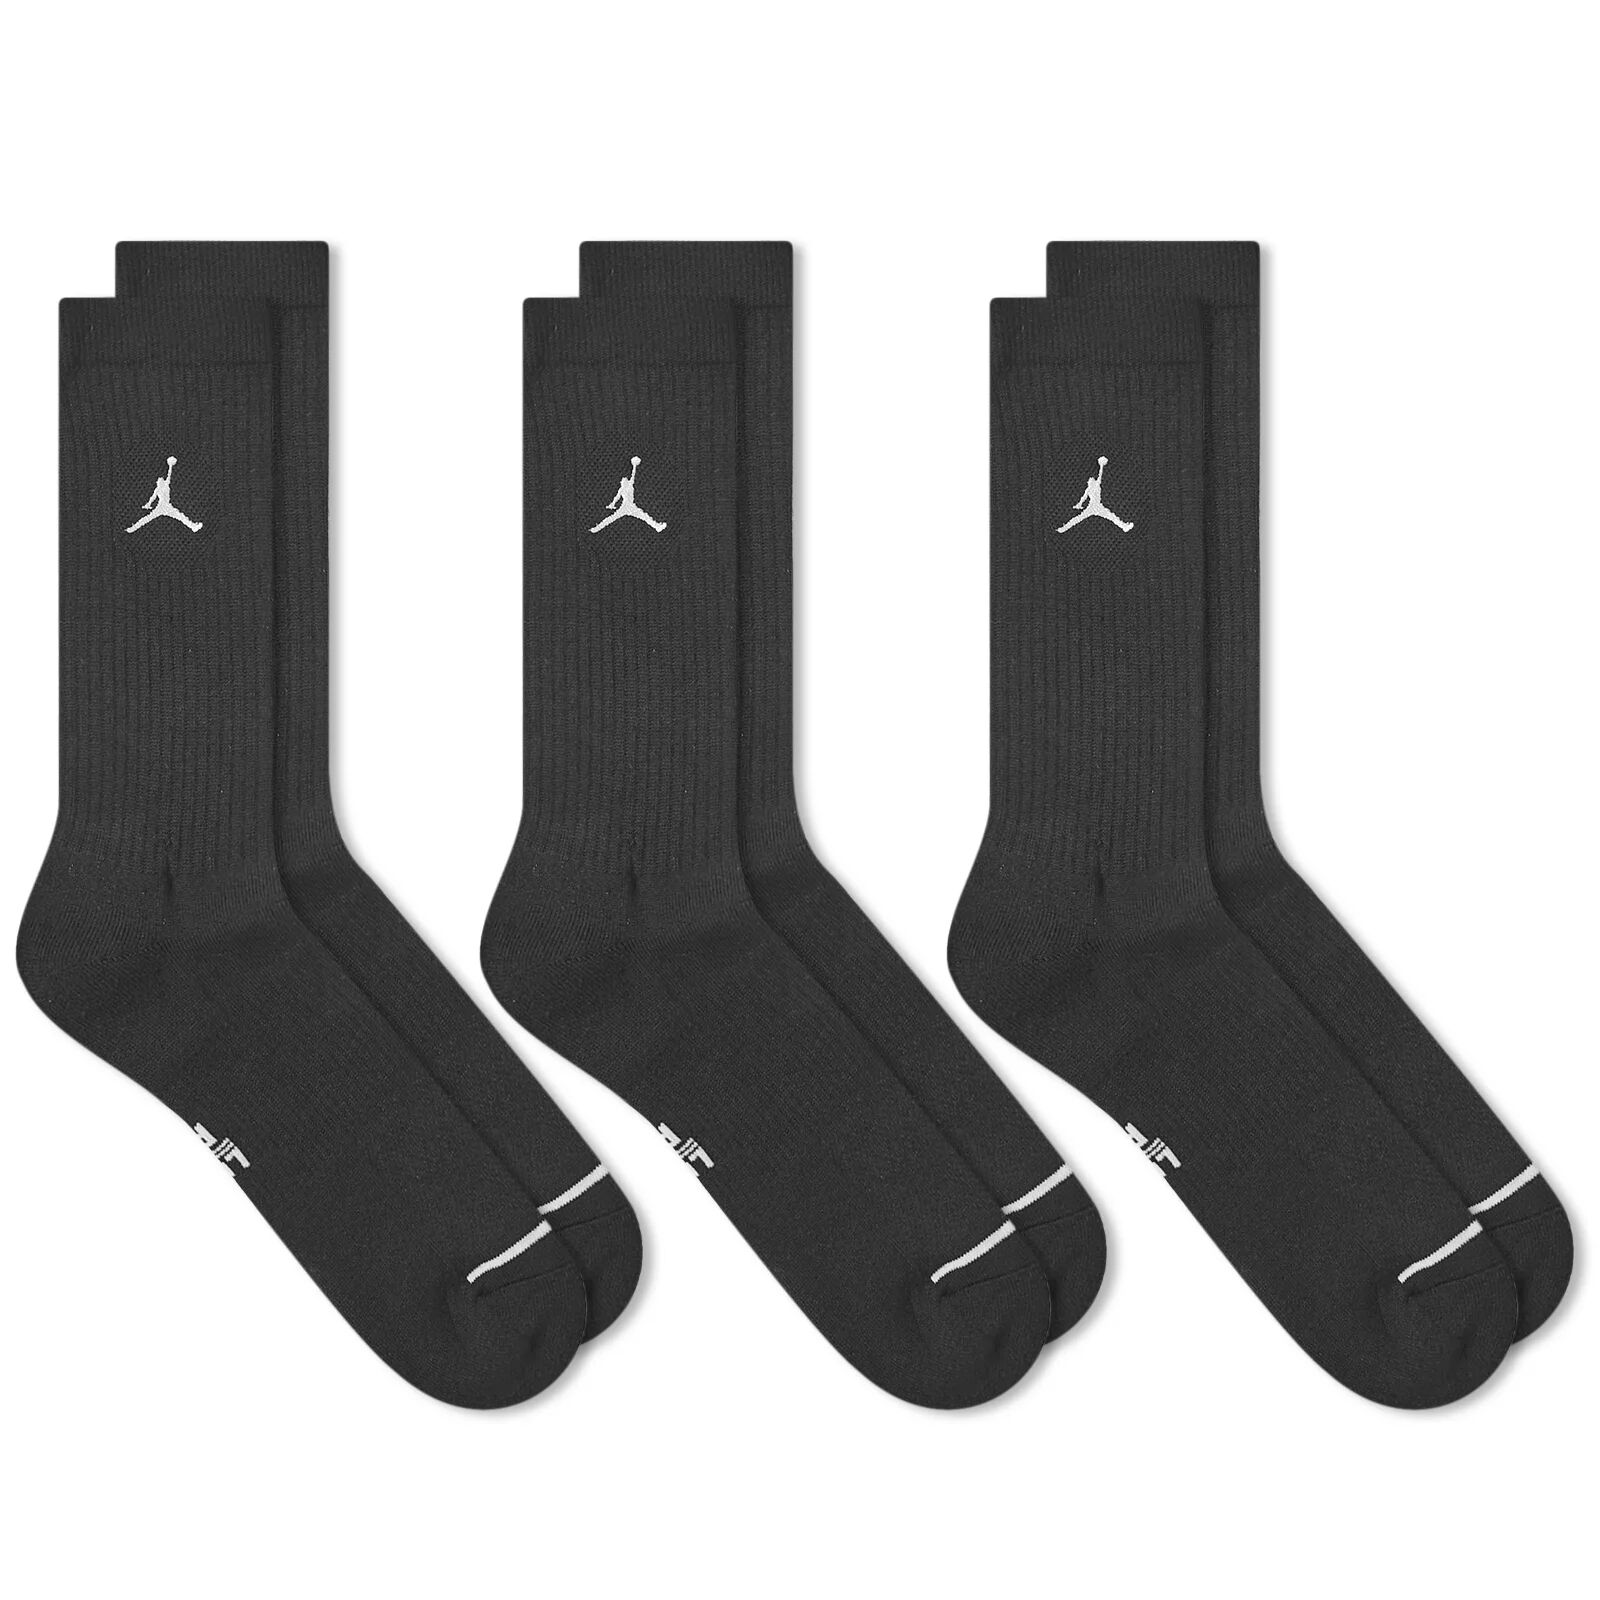 Air Jordan Men's Everyday Cushion Crew Sock - 3 Pack in Black/White, Size Medium